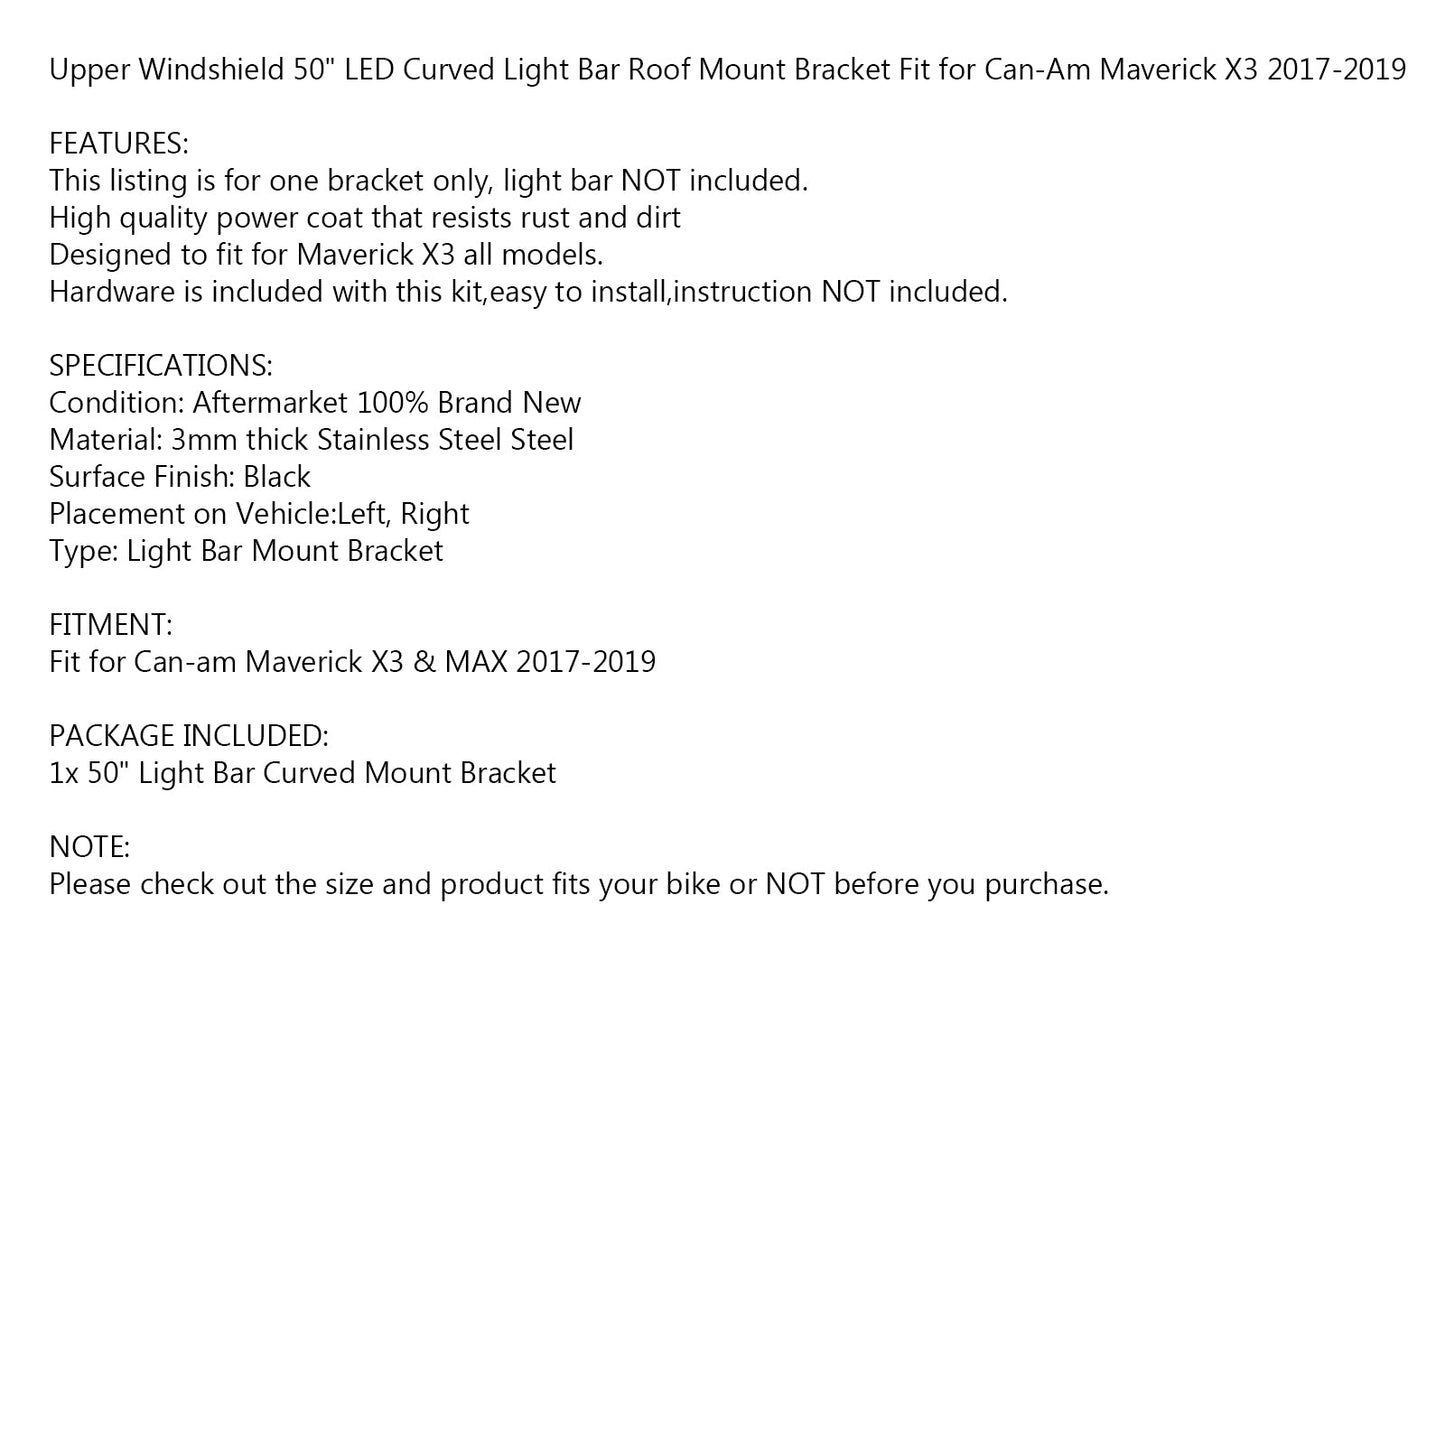 Upper Windshield 50" LED Curved Light Bar Roof Mount Bracket For Can-am Maverick X3 2017-2019